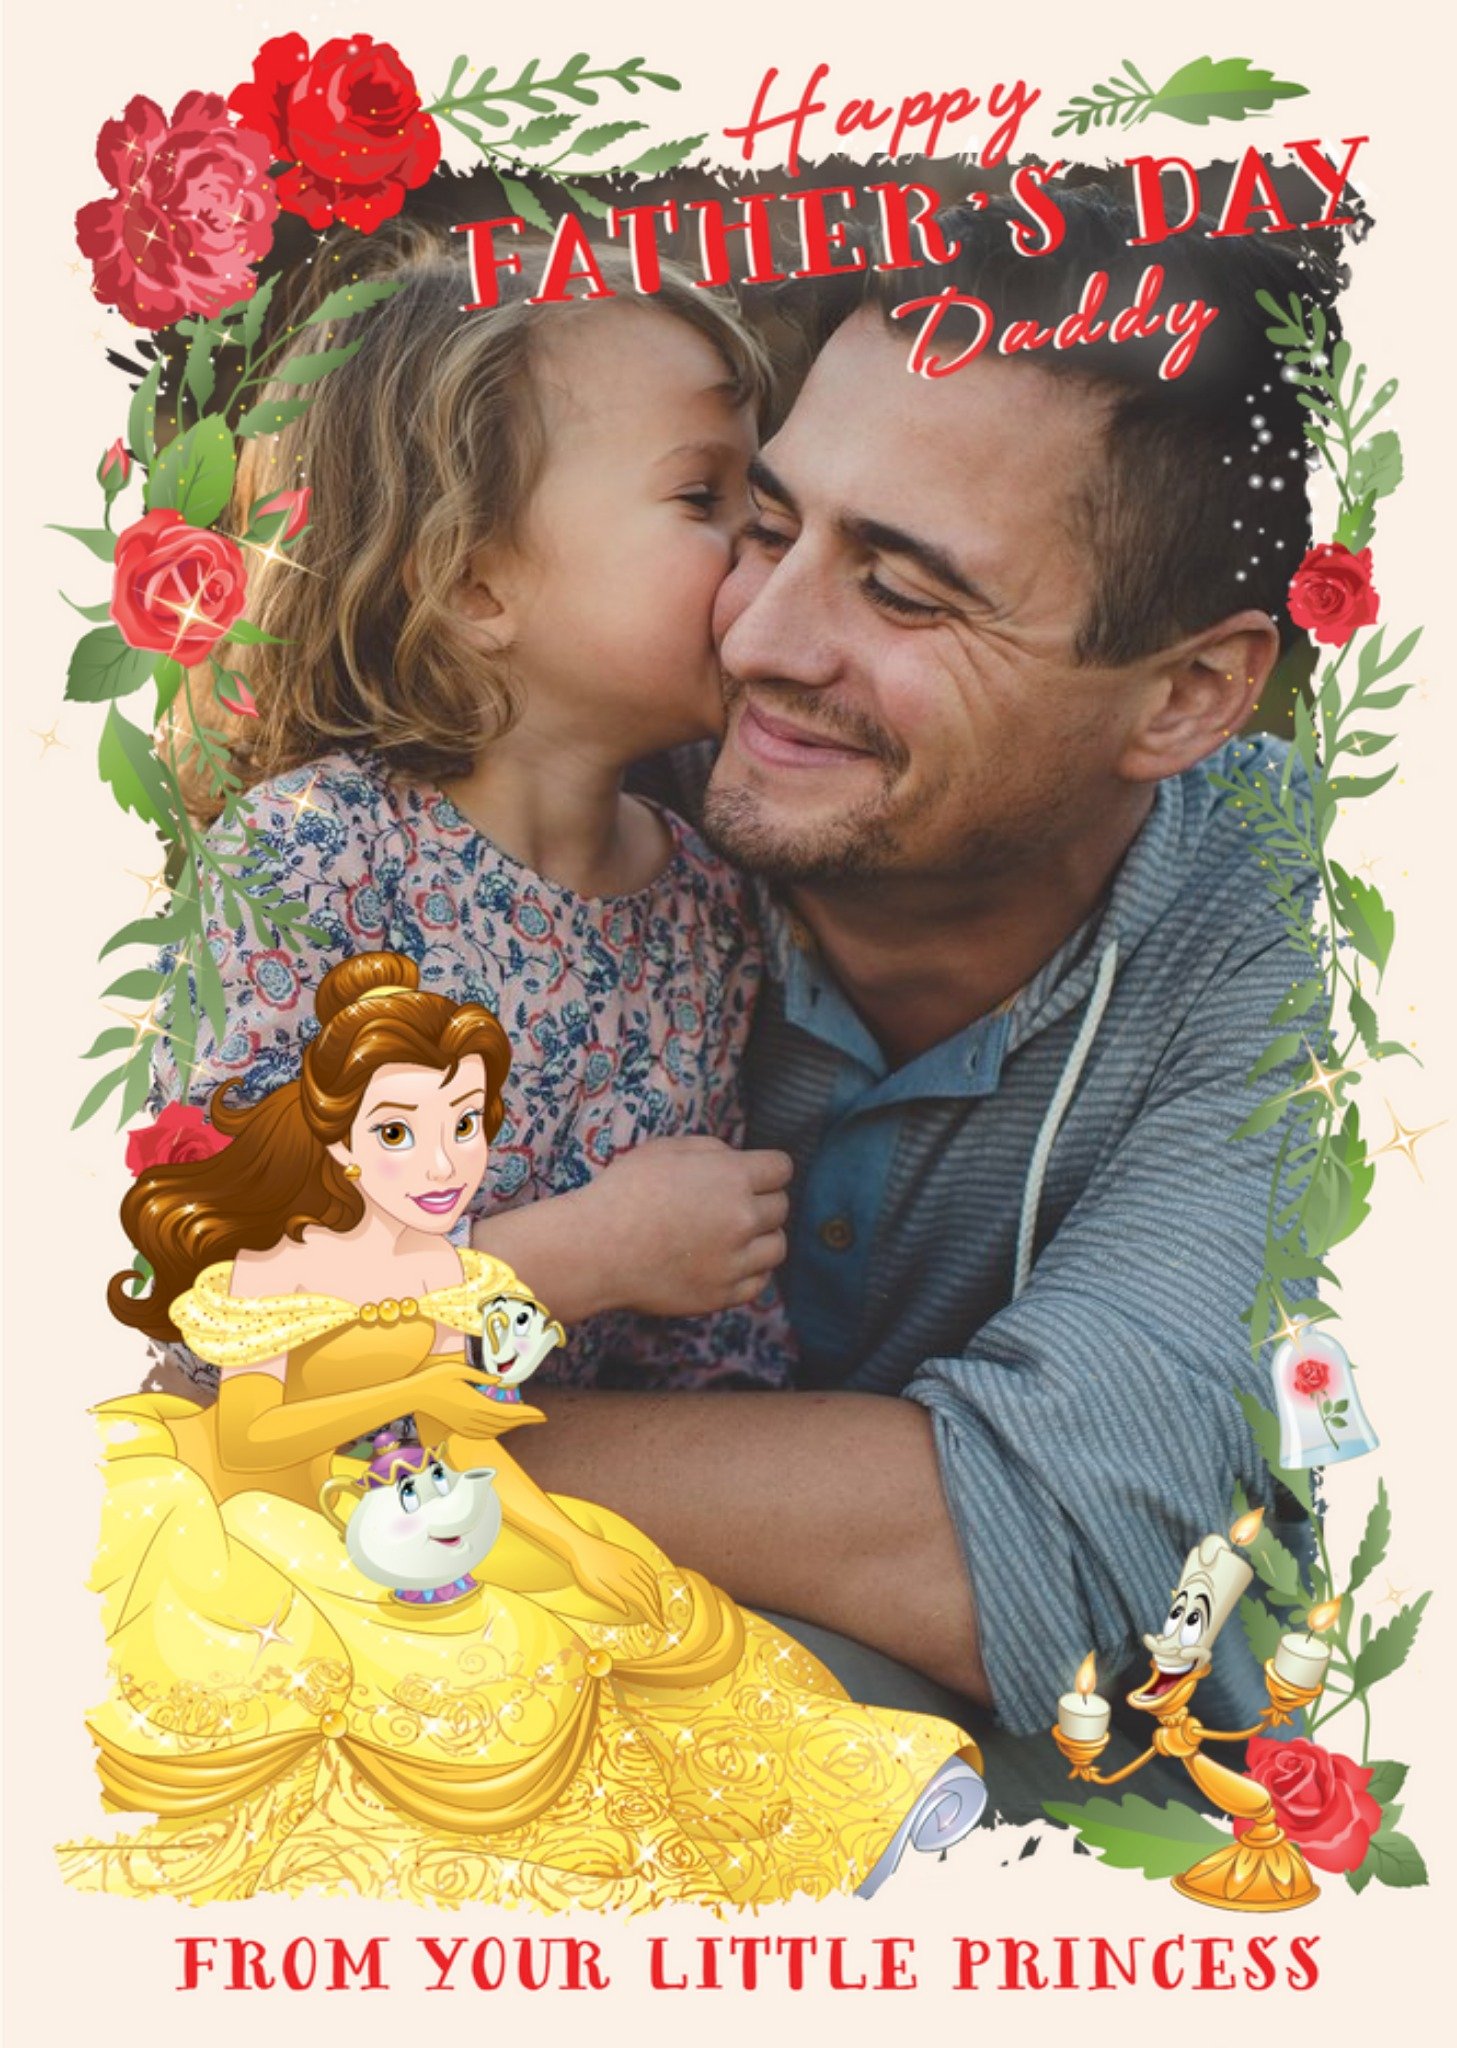 Disney Princesses Disney Princess Belle Happy Fathers Day Photo Card, Large